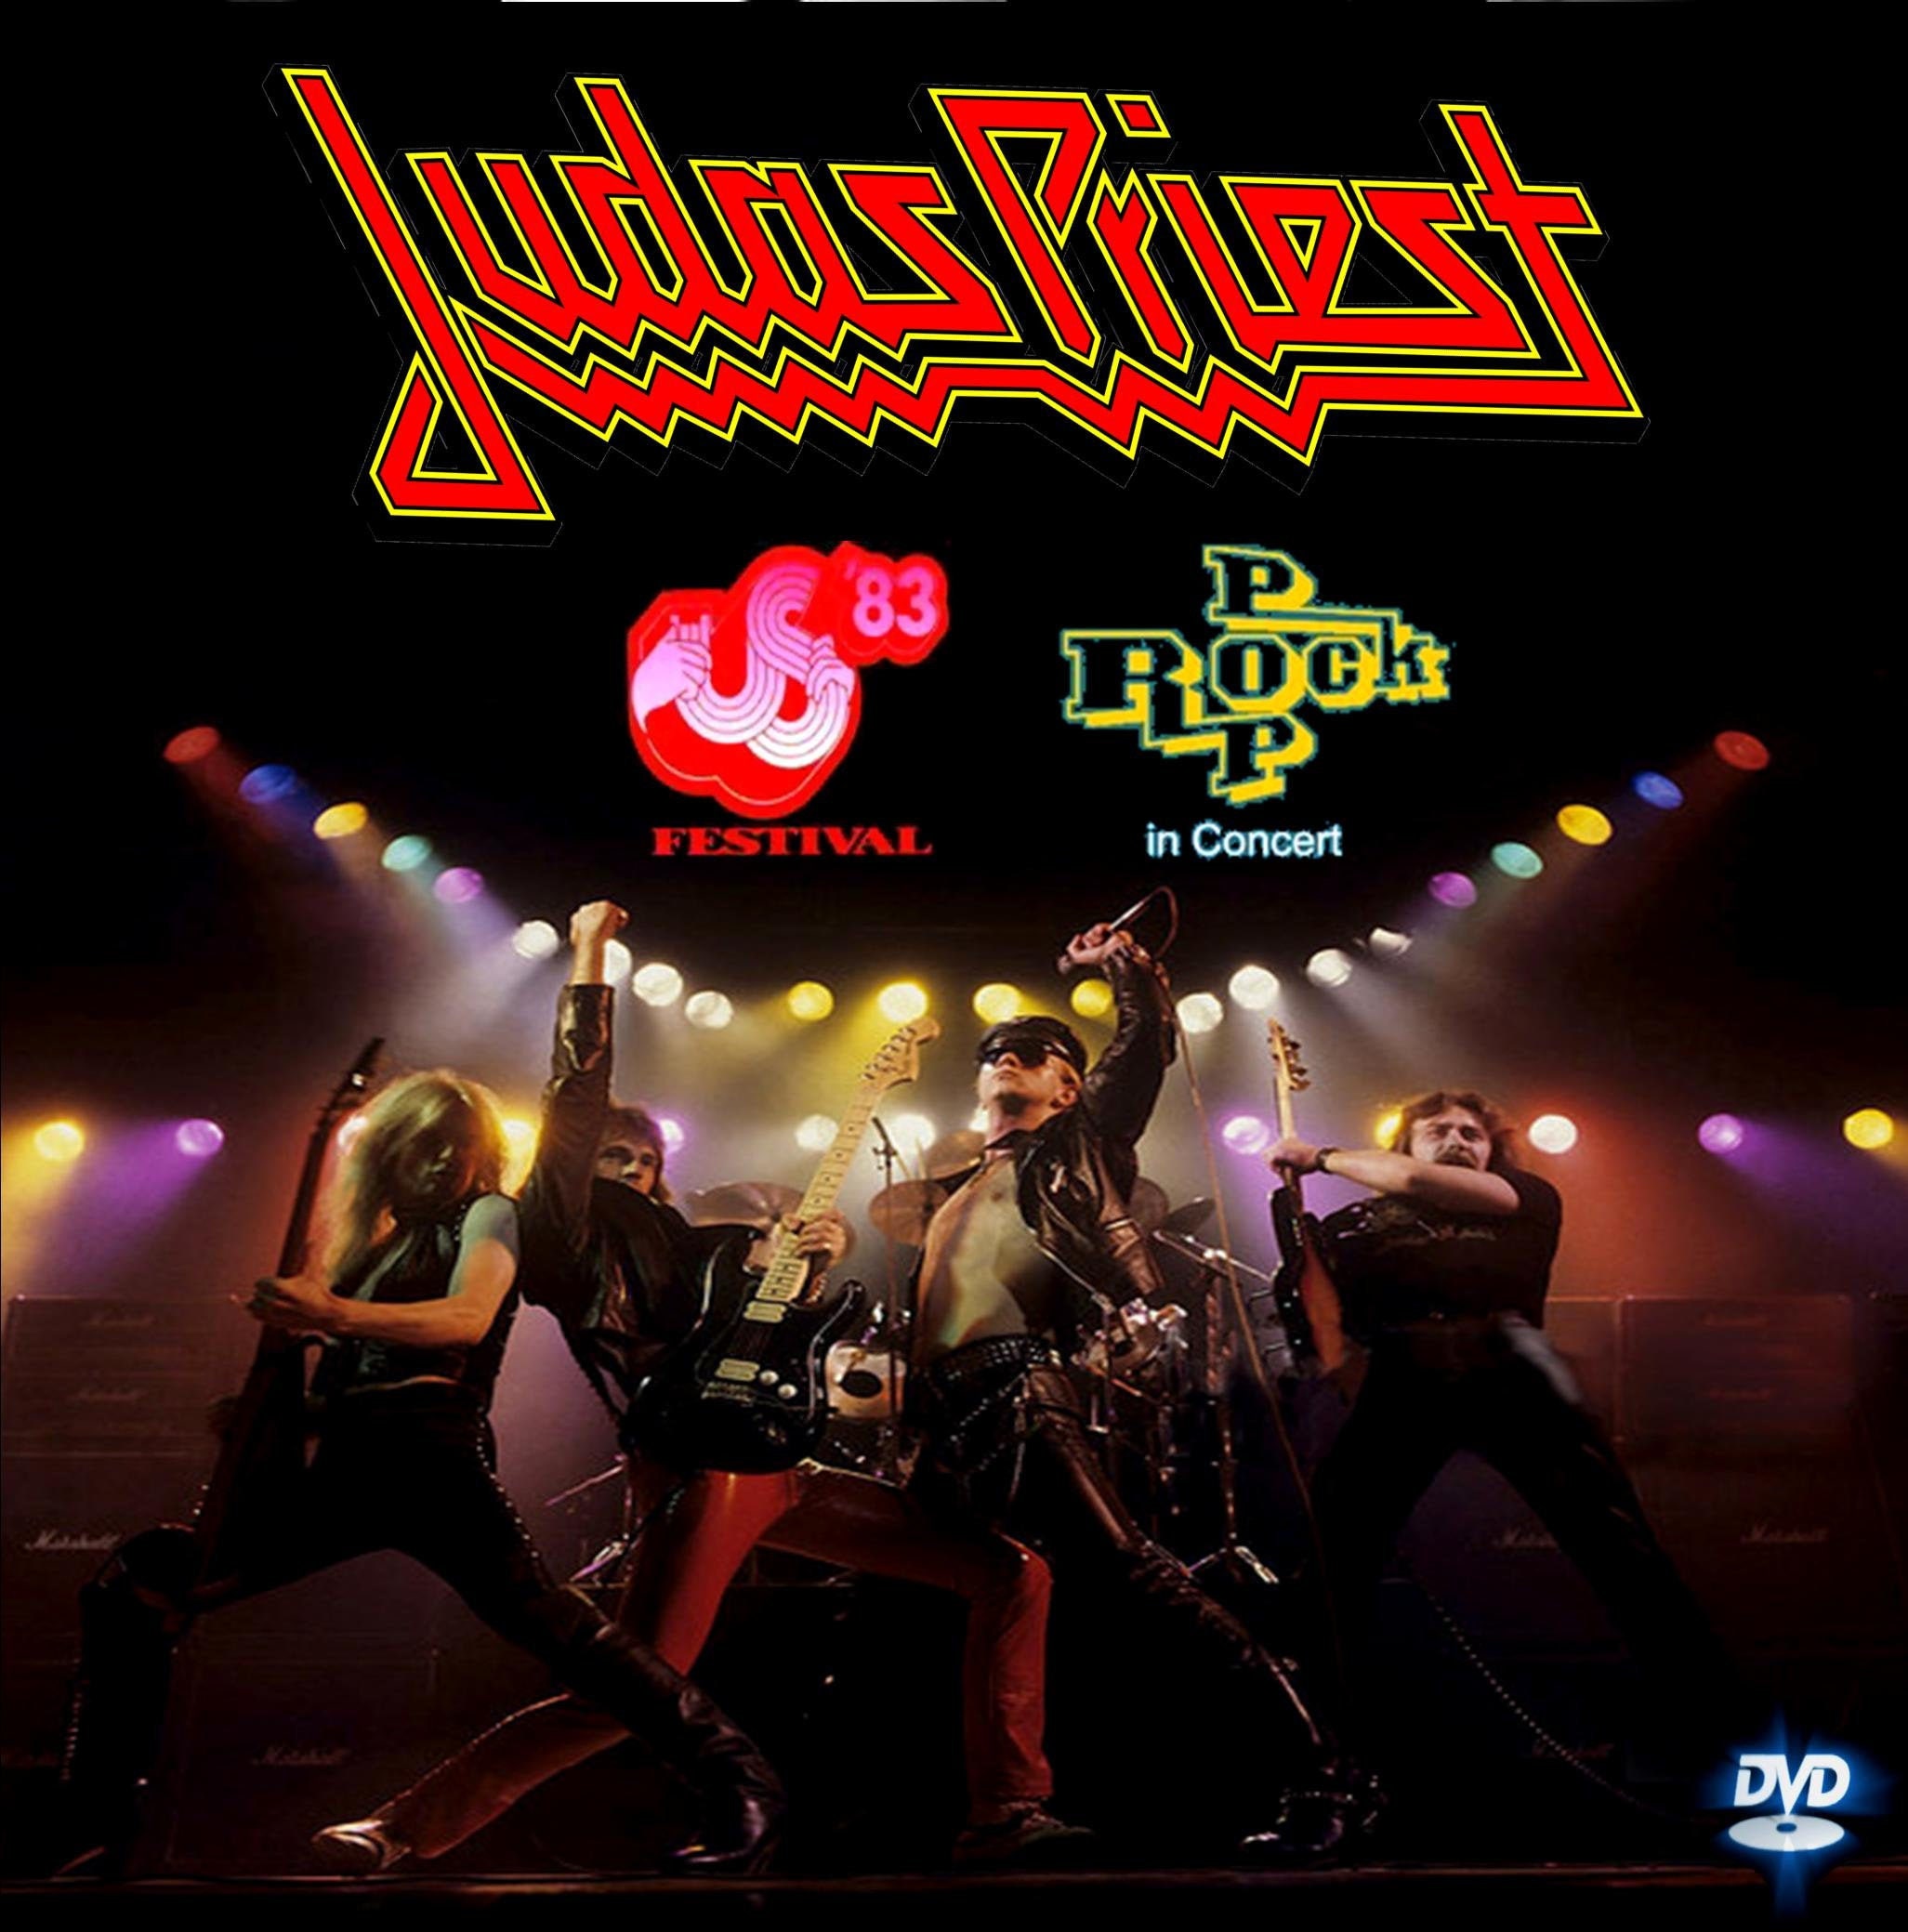 Judas Priest LIVE 1983 - US Fest & Rock n Pop in Concert 2 dvds